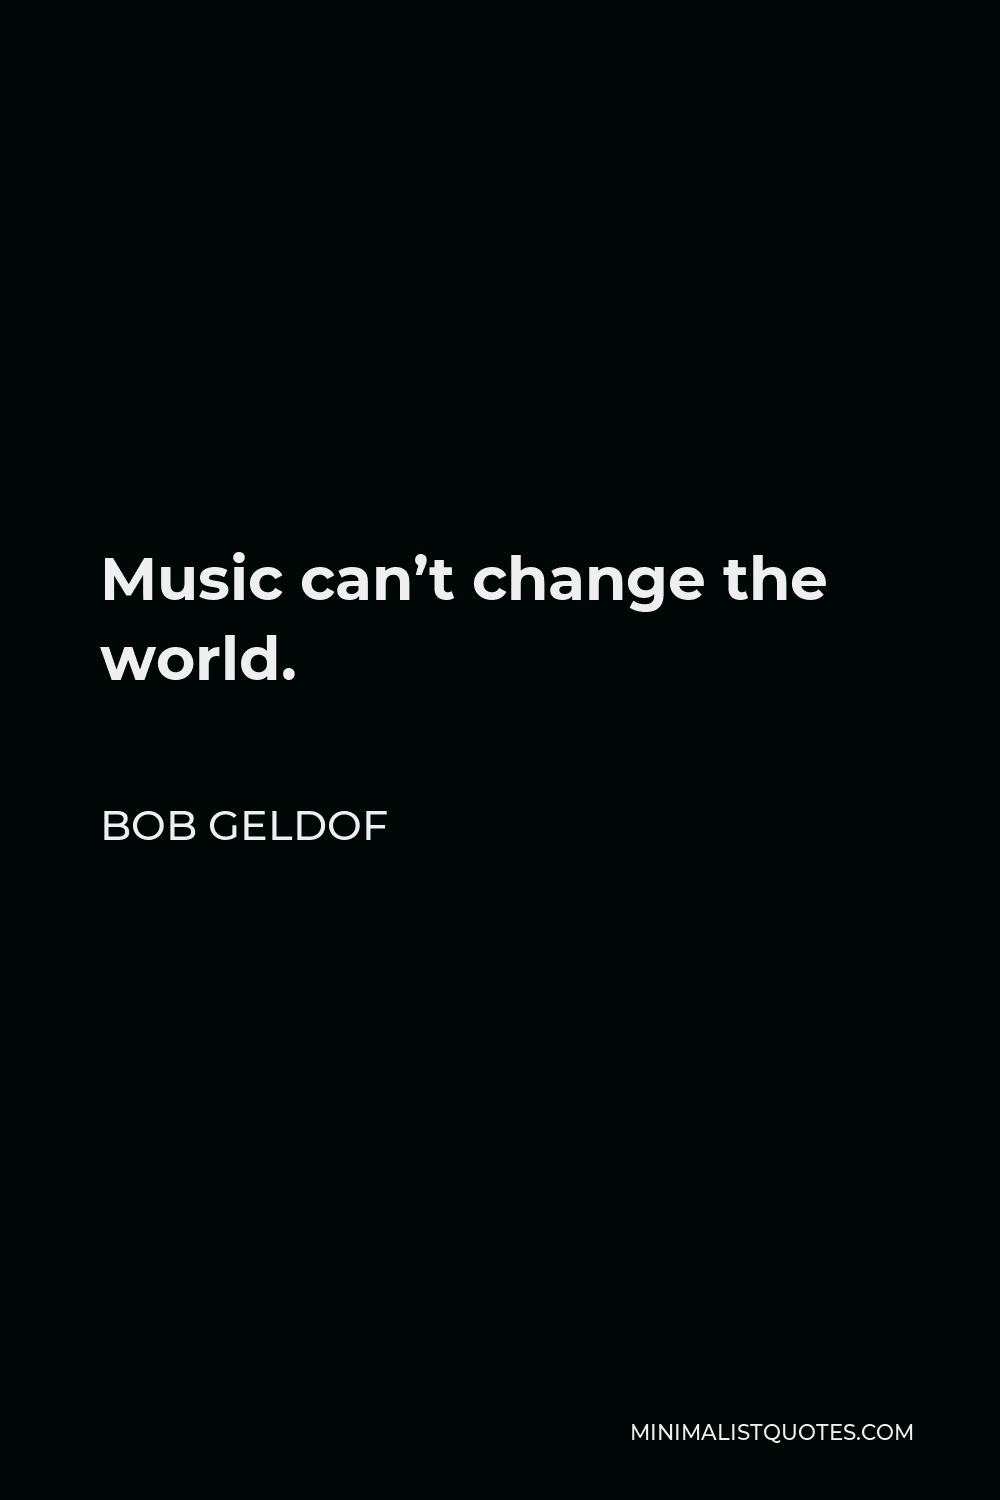 Bob Geldof Quote - Music can’t change the world.